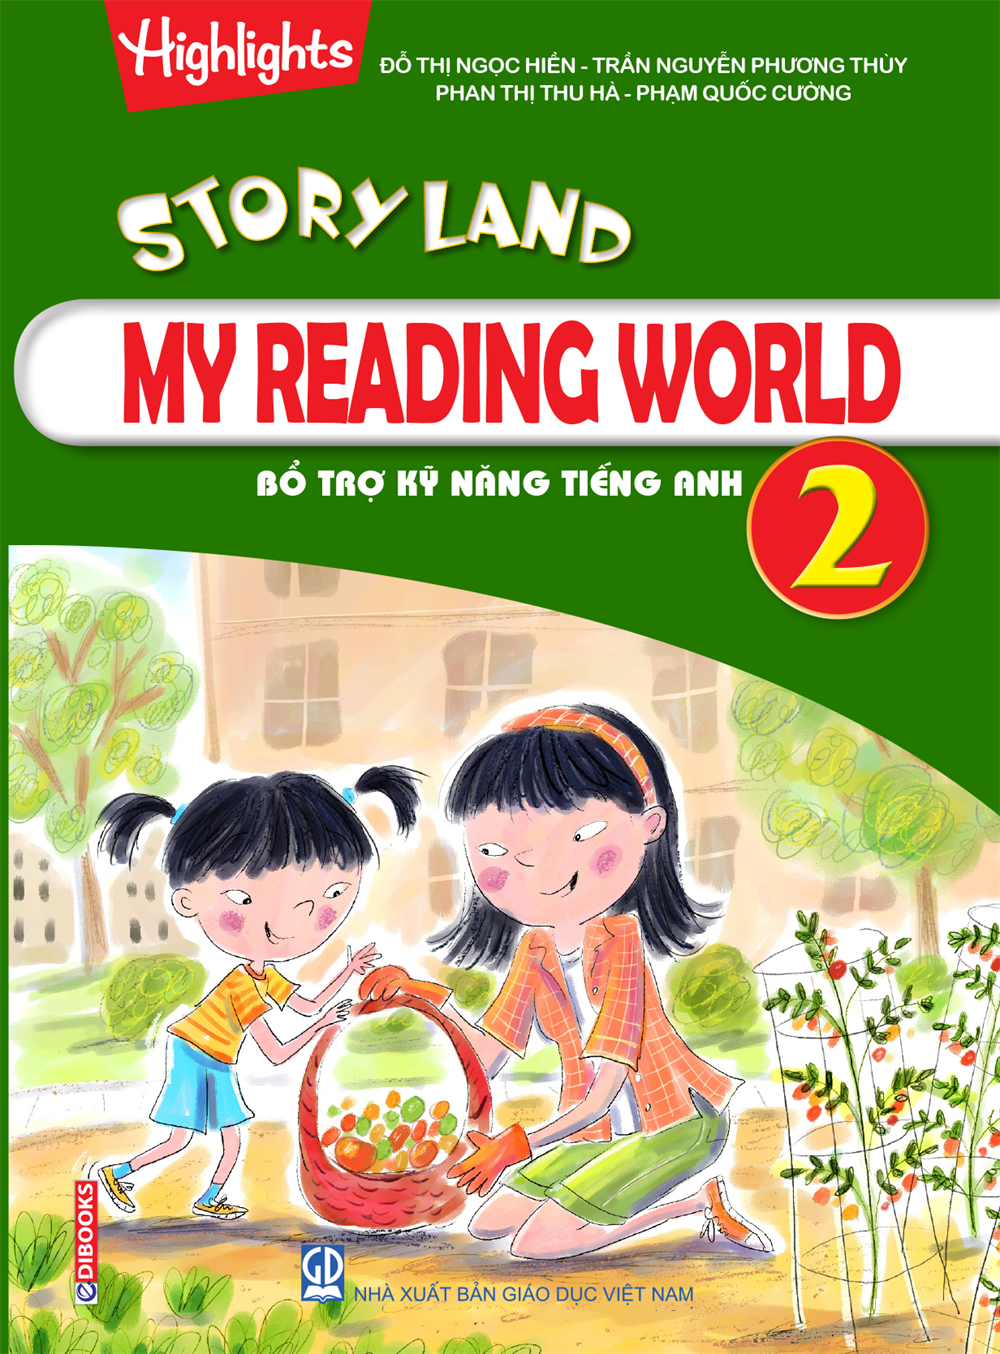 Story Land - bổ trợ kỹ năng Tiếng Anh 2 - My reading world 2